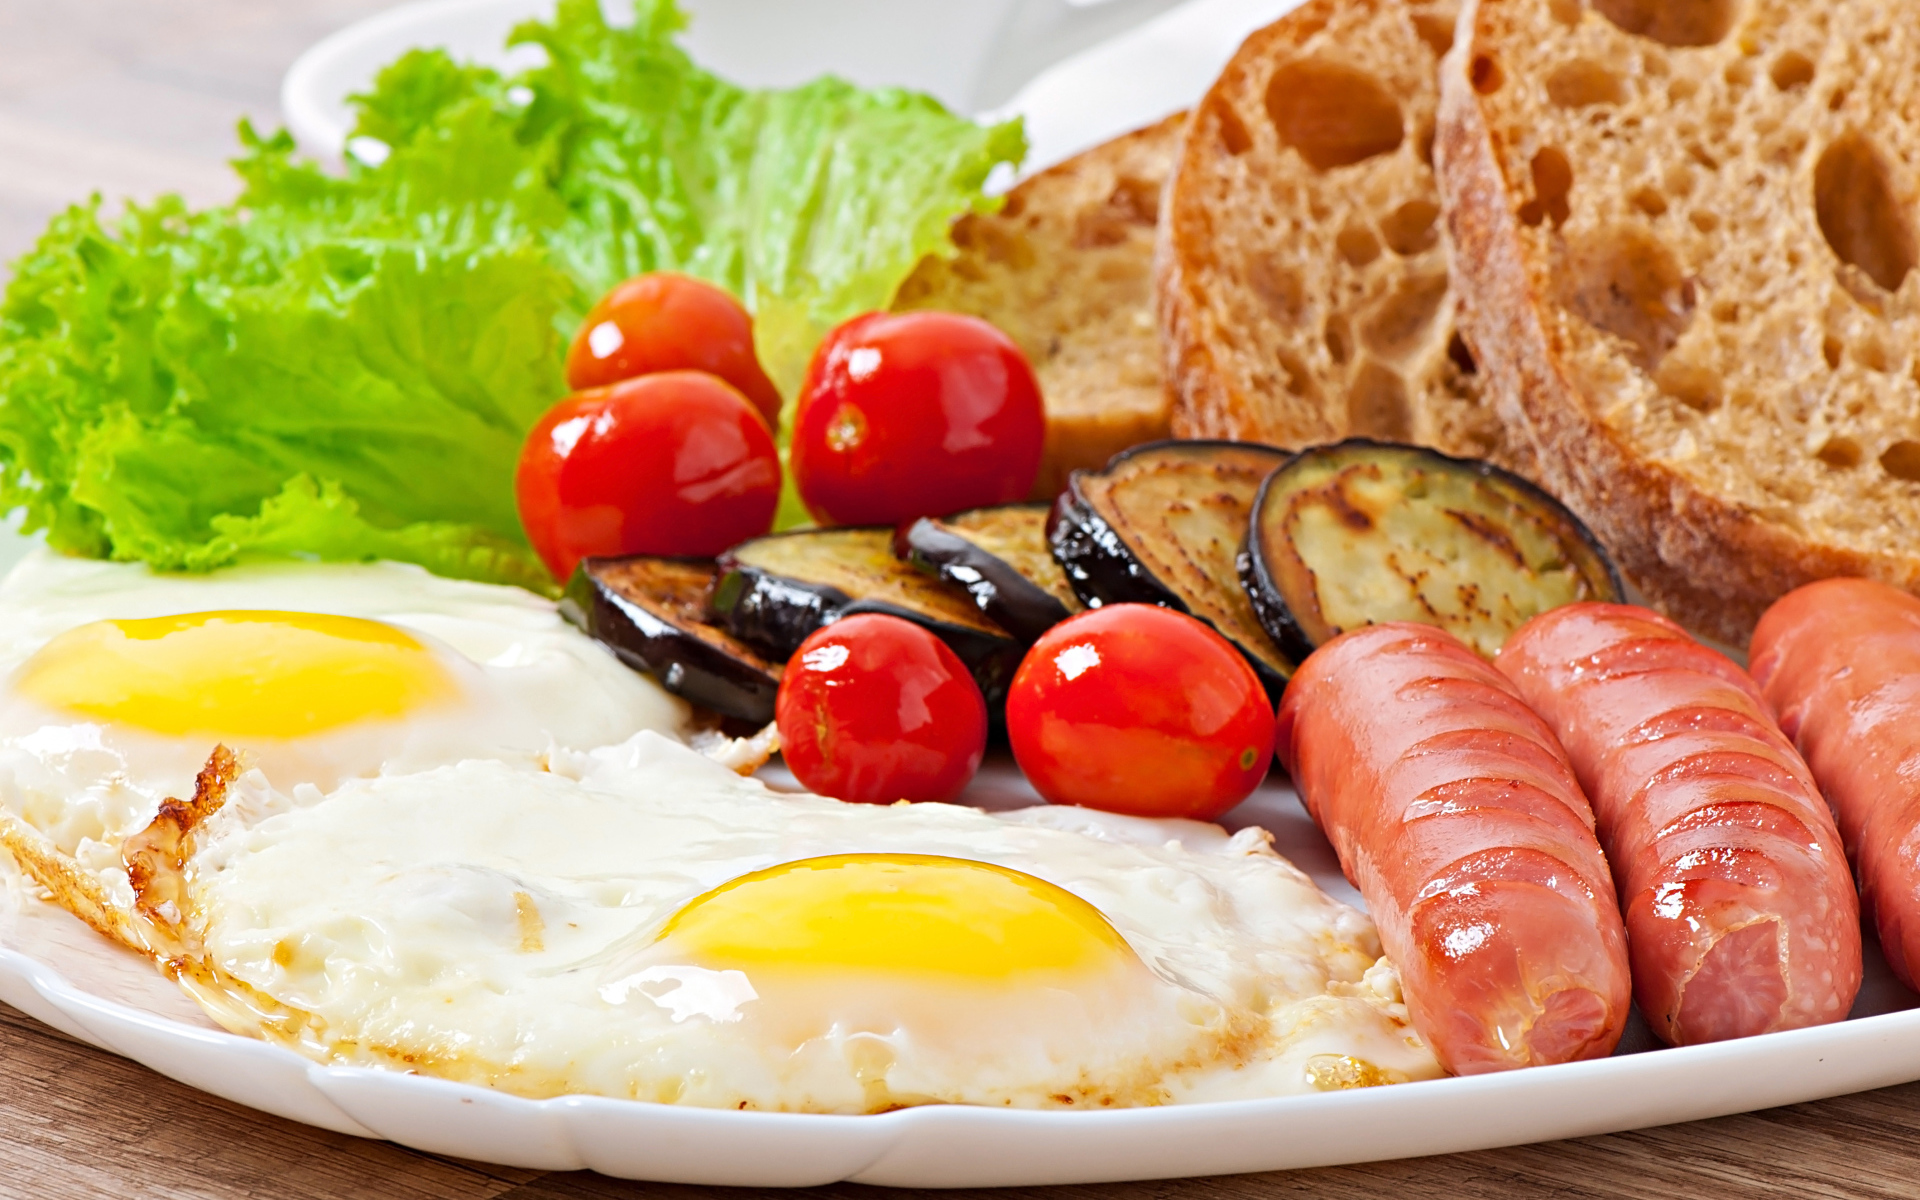 Яичница на тарелке с сосисками, овощами и хлебом